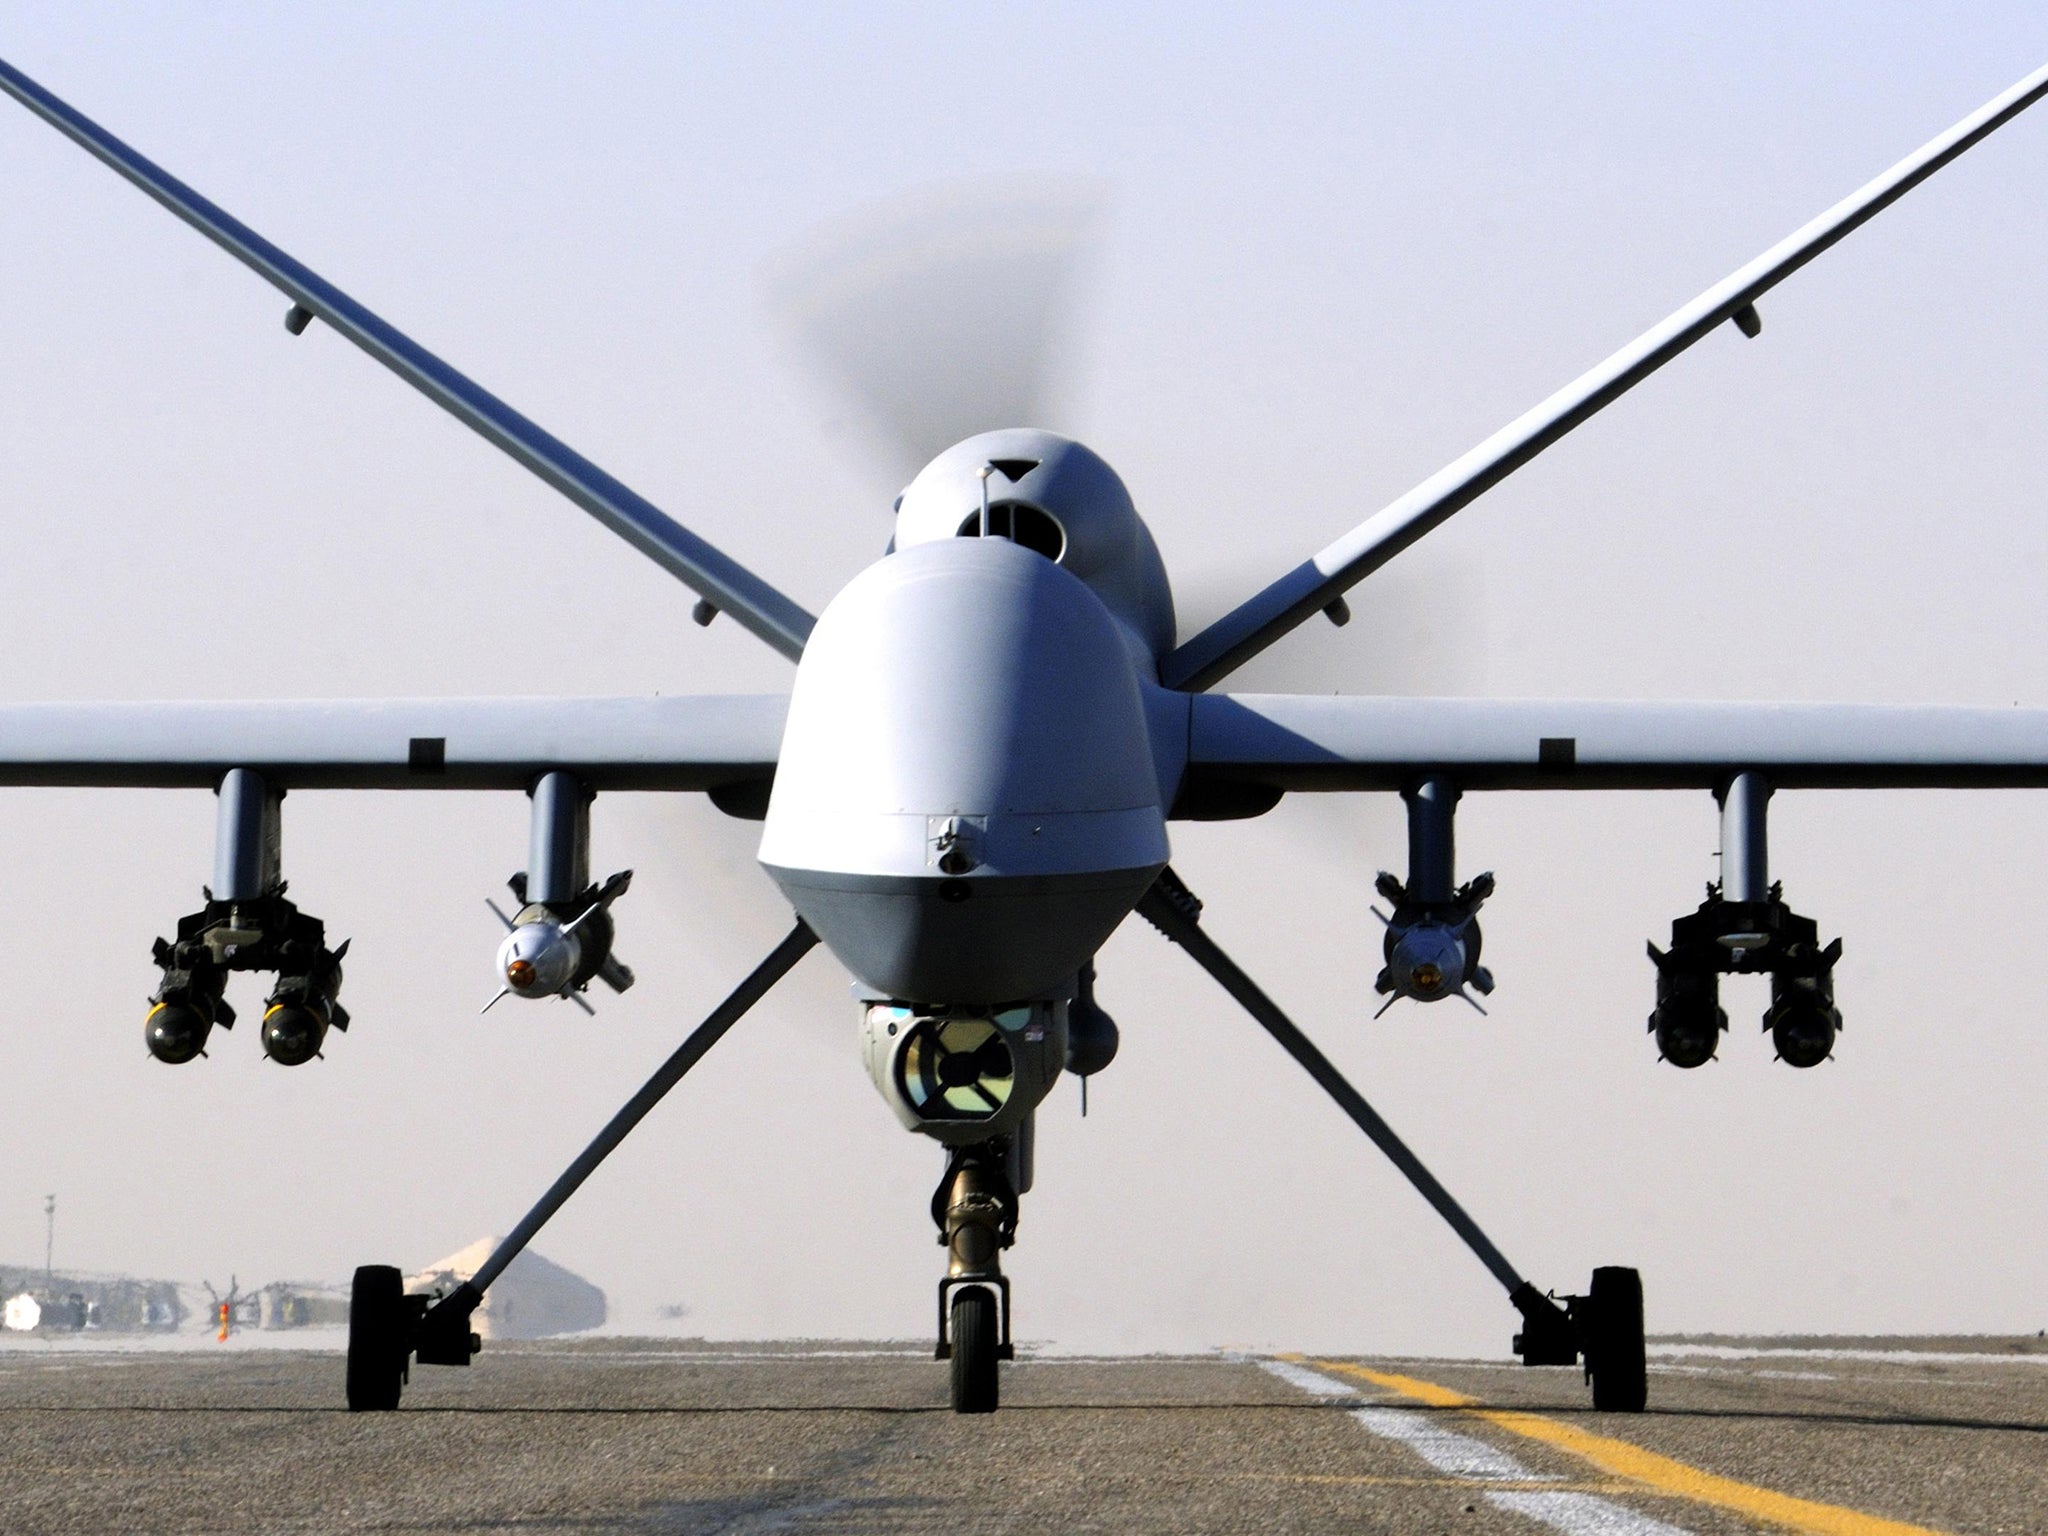 An RAF Reaper UAV (unmanned aerial vehicle)